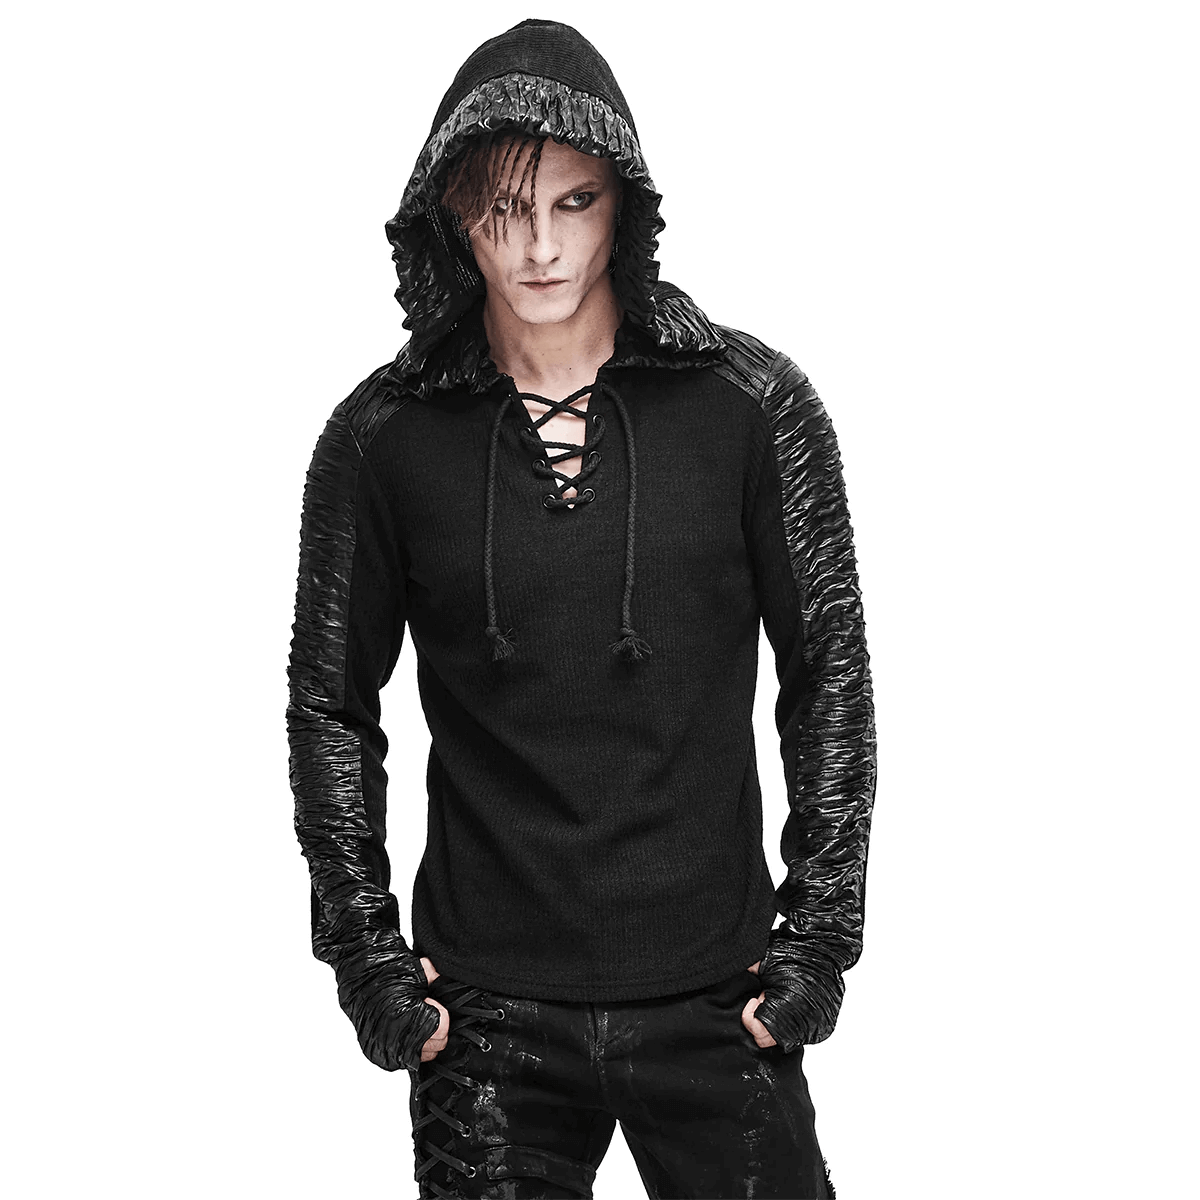 Dark Fashion: Gothic & Alternative Clothing - Unique Styles